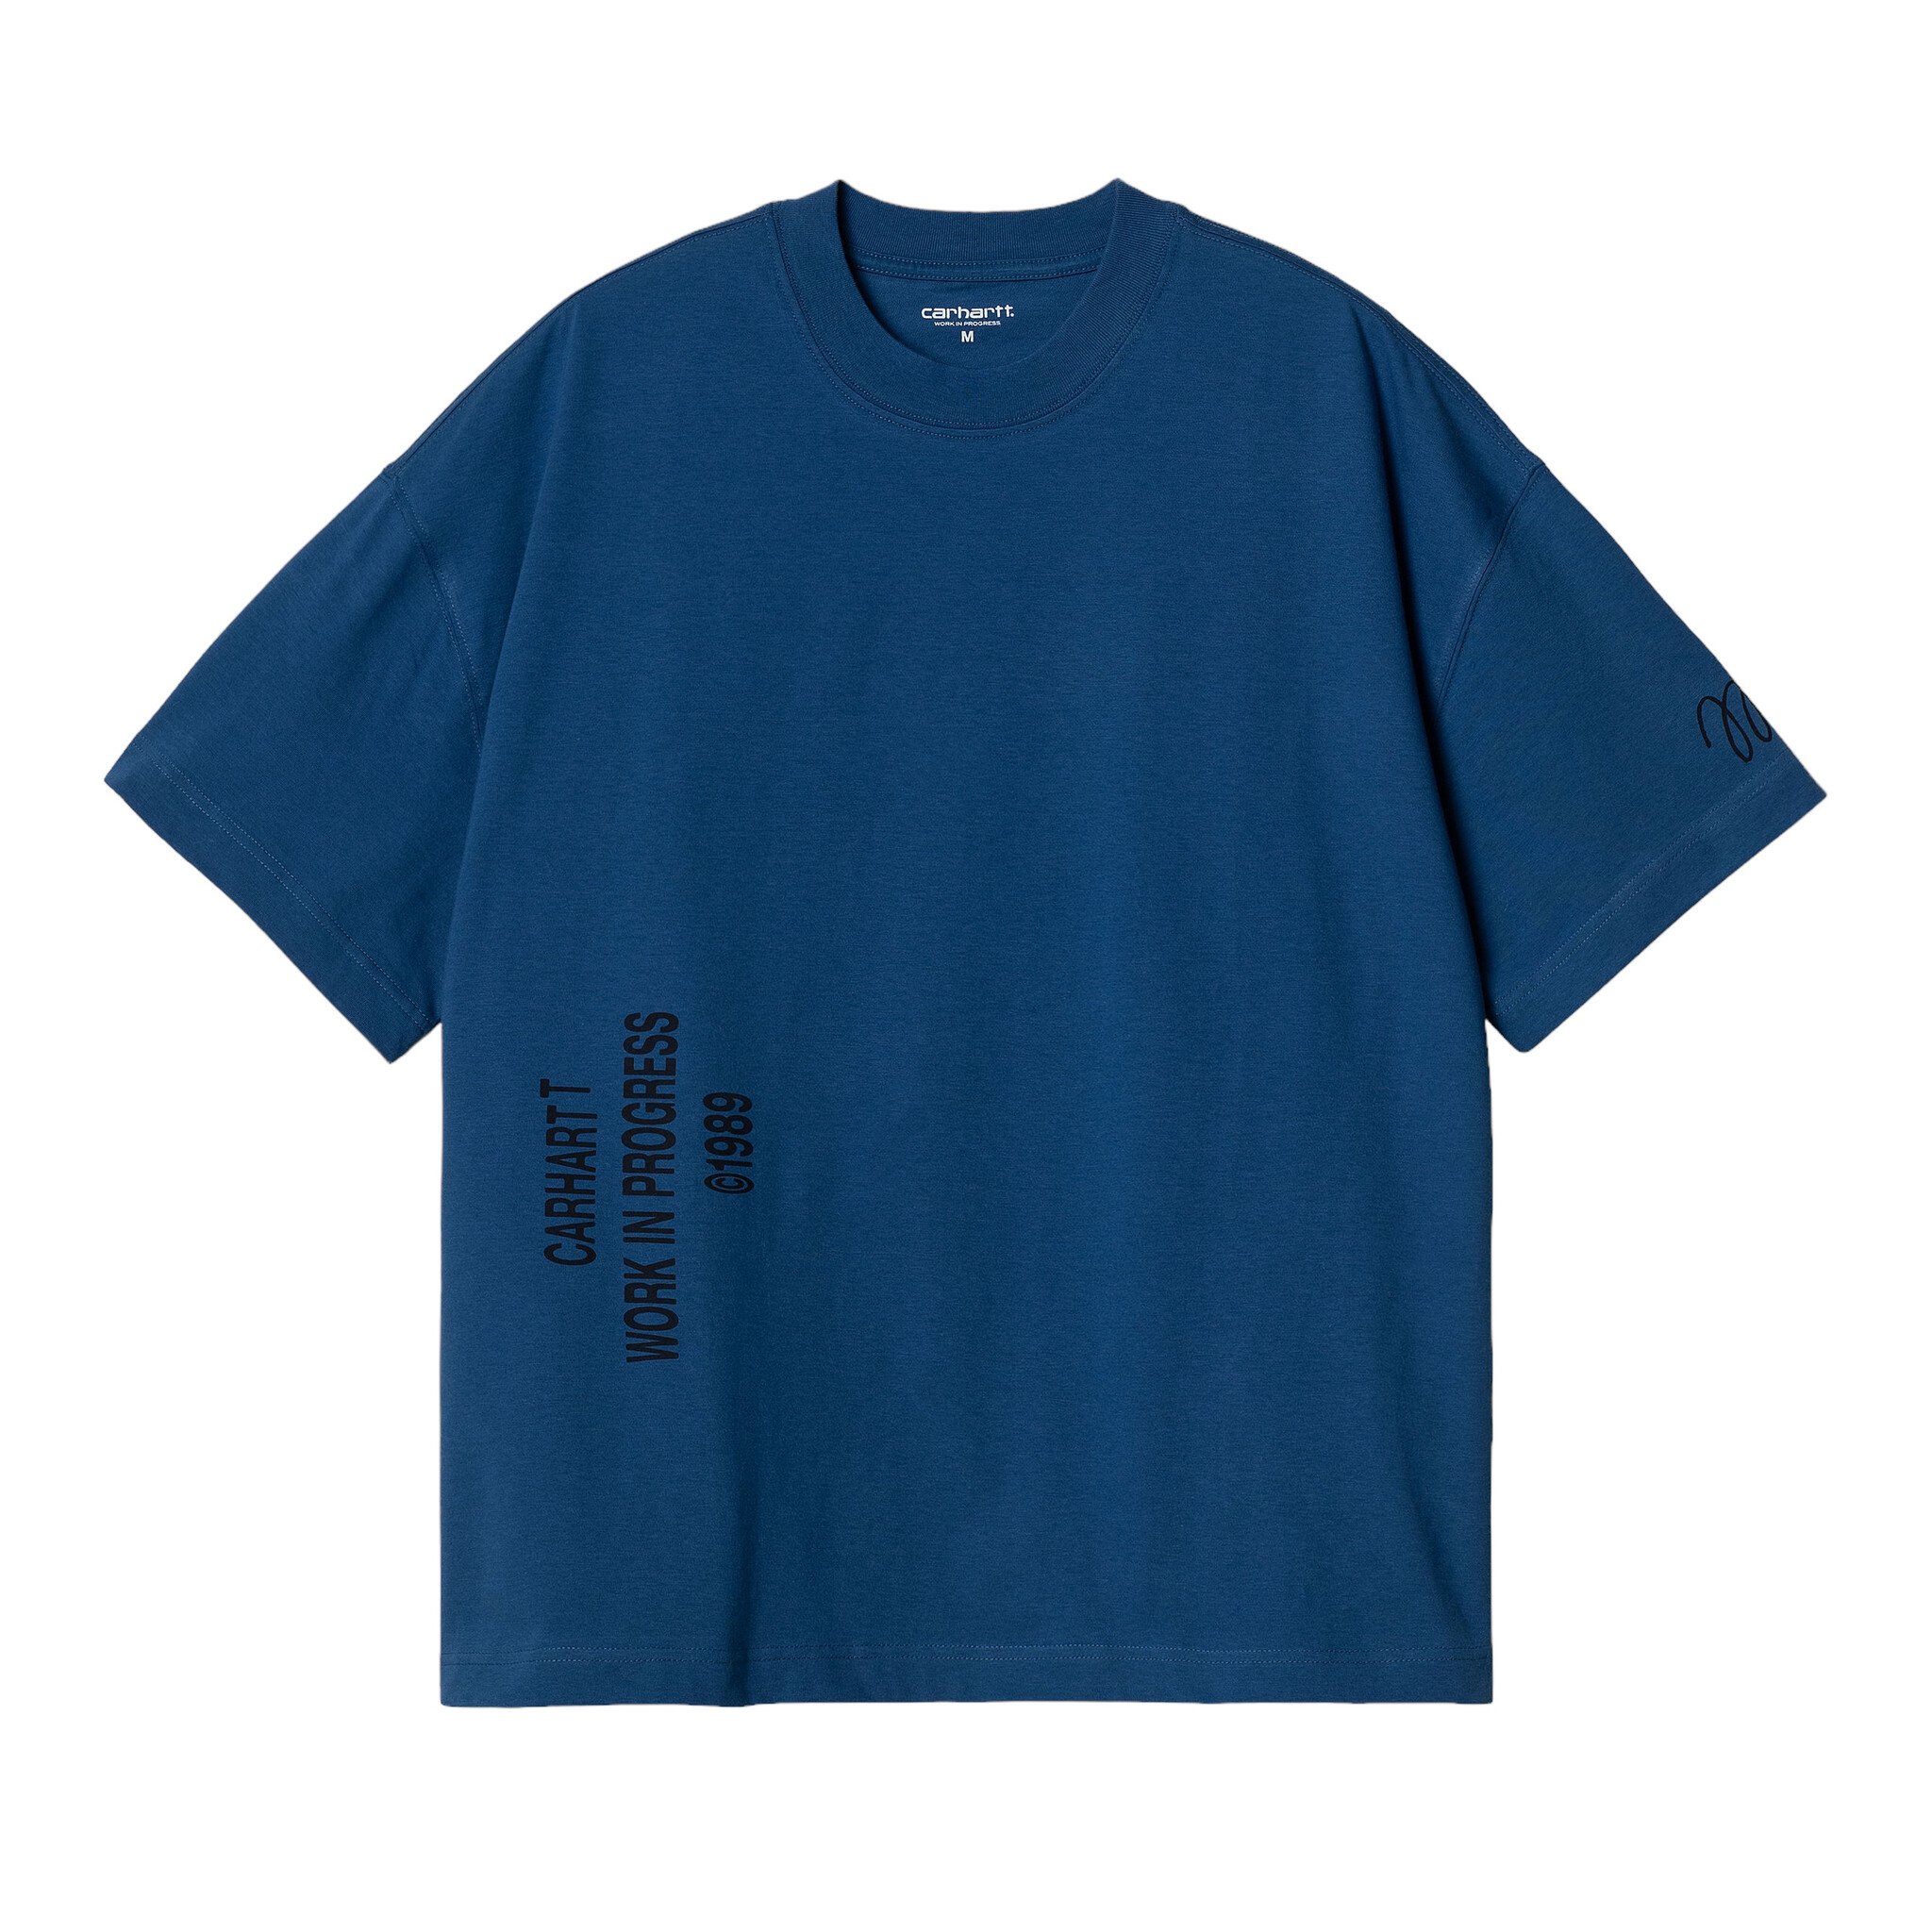 Carhartt S/S Signature T-Shirt - Liberty